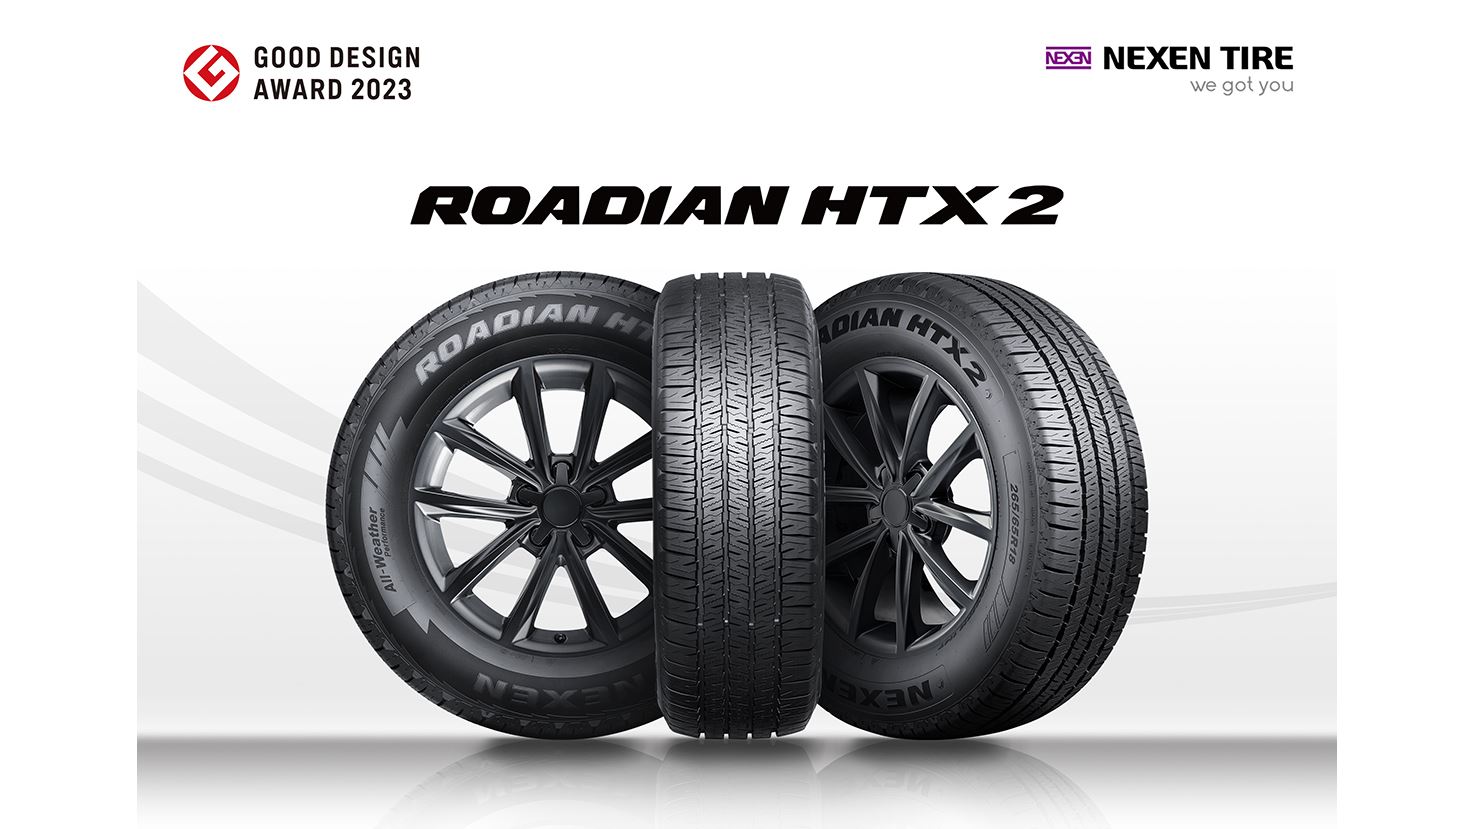 NEXEN TIRE wins Good Design Award 2023 for Roadian HTX 2